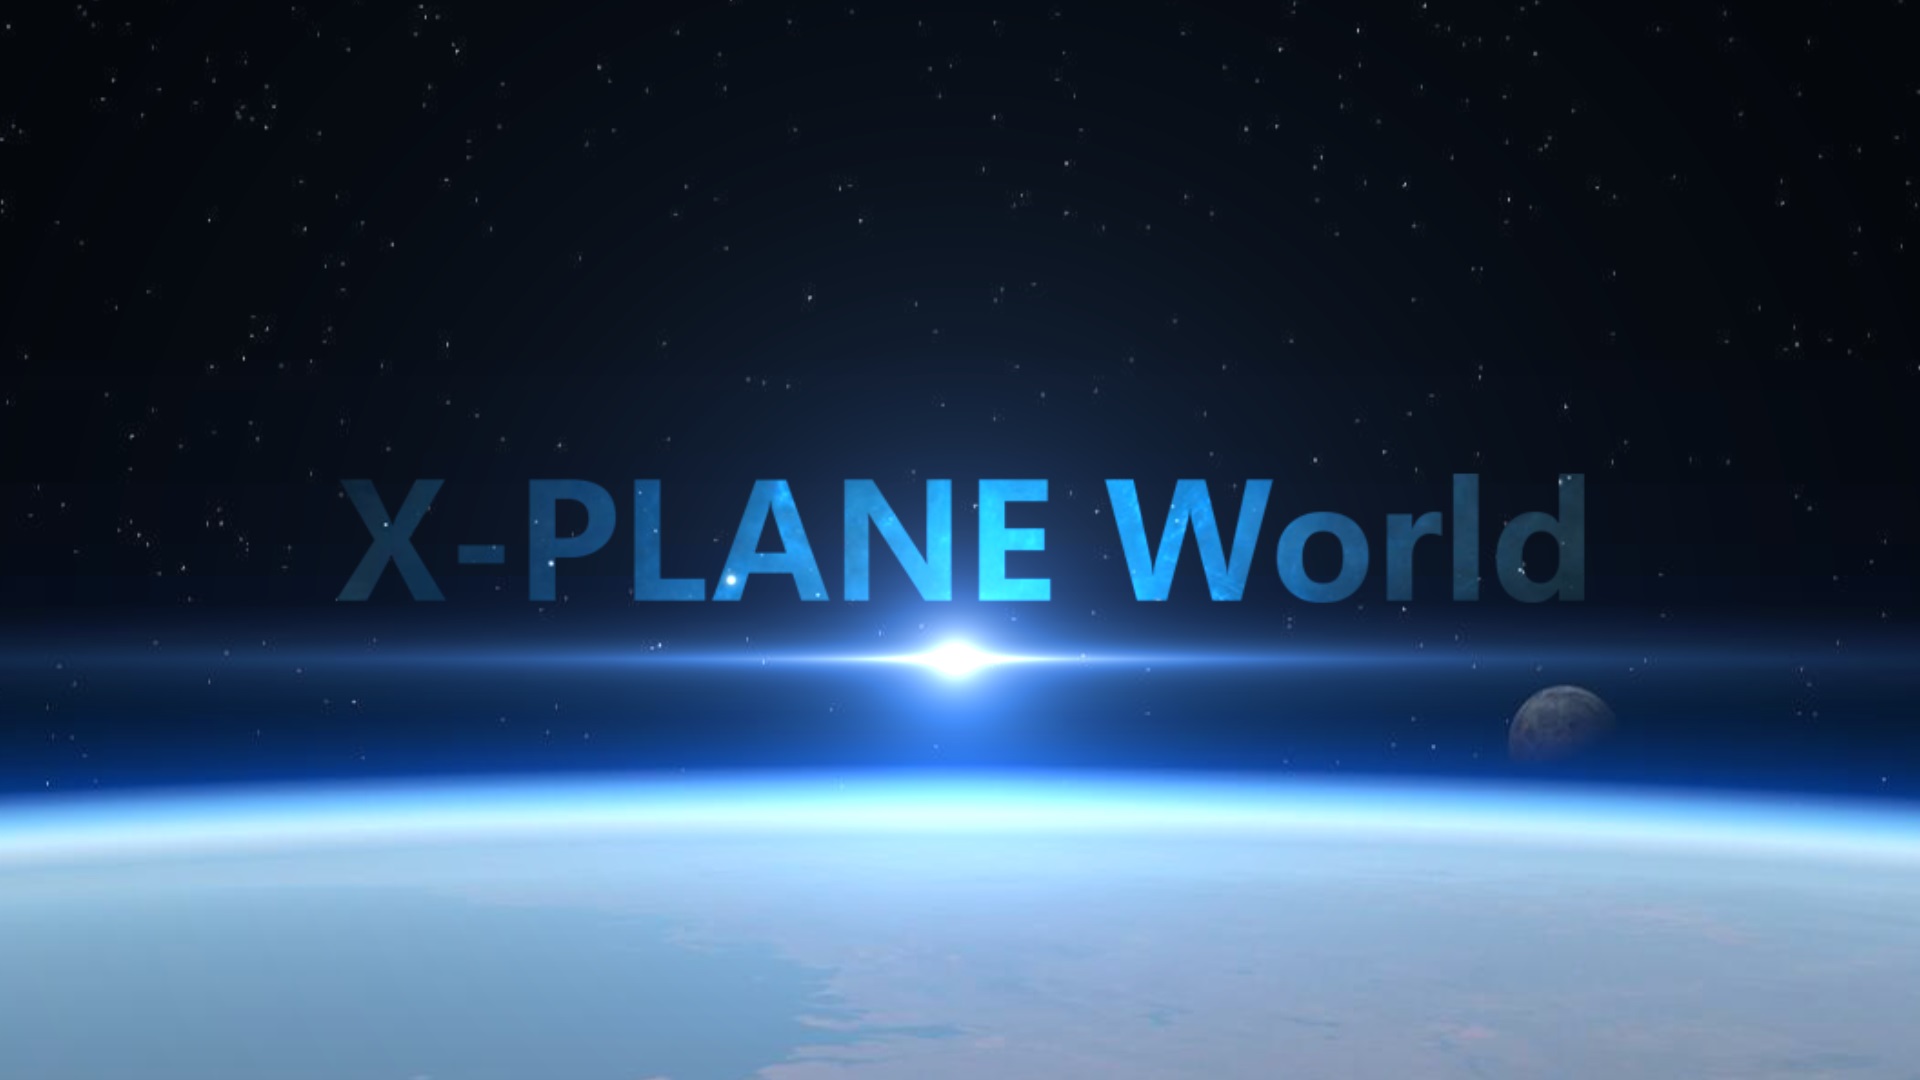 X-PLANE FILM - XP World-2474 